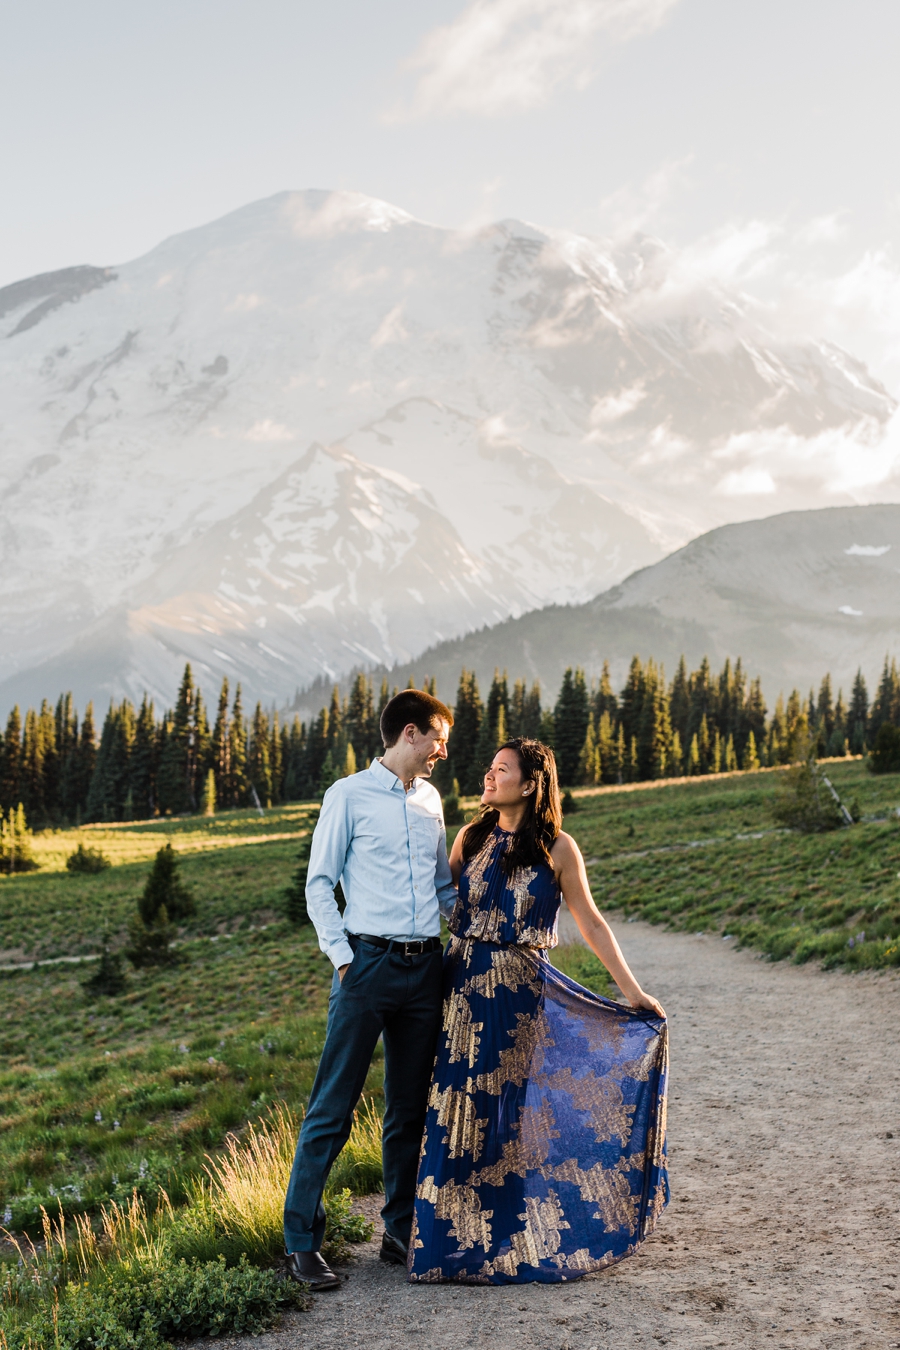 Mt Rainier Engagement Photos during Wildflower Season captured by Seattle Adventure Wedding Photographer Amy Galbraith